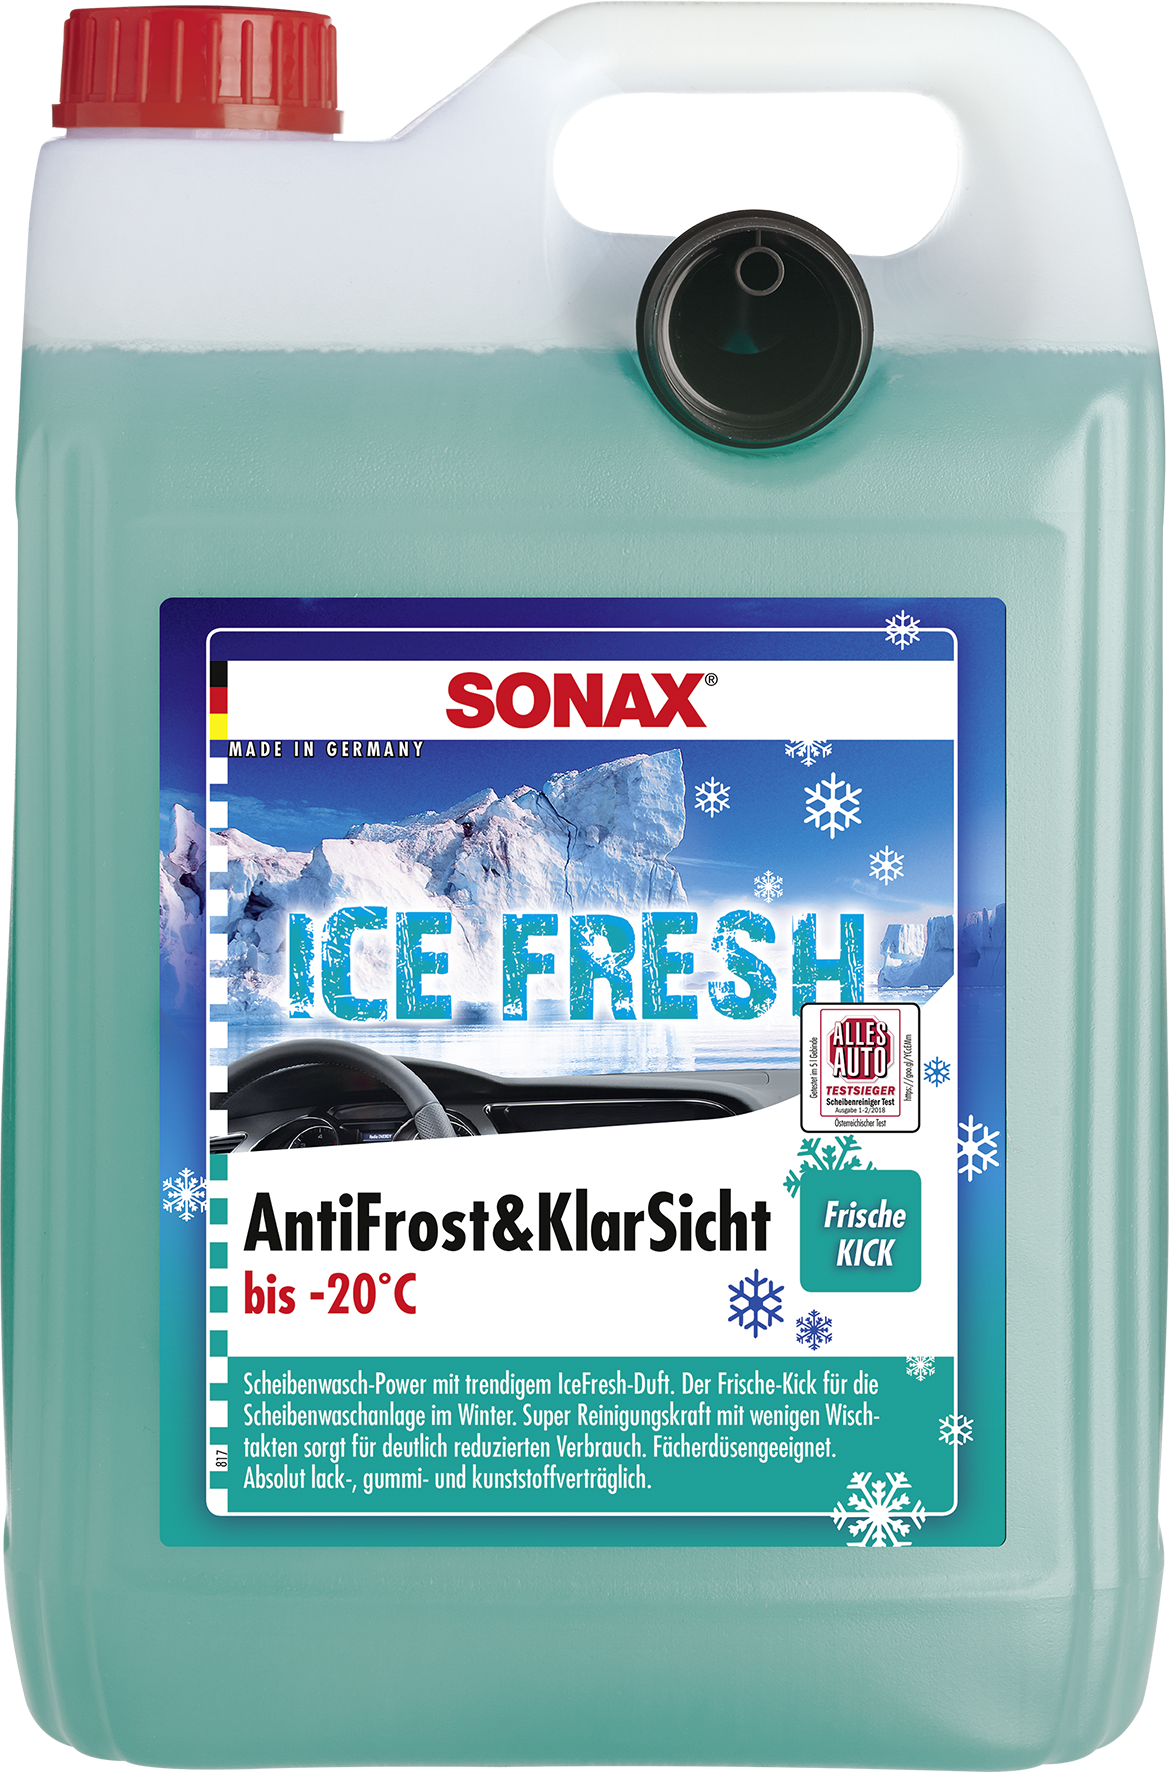 https://www.eu-bay.de/media/image/a8/38/d4/sonax-antifrost-klarsicht-icefresh-gebrauchsfertig-bis-20-c-207650.png